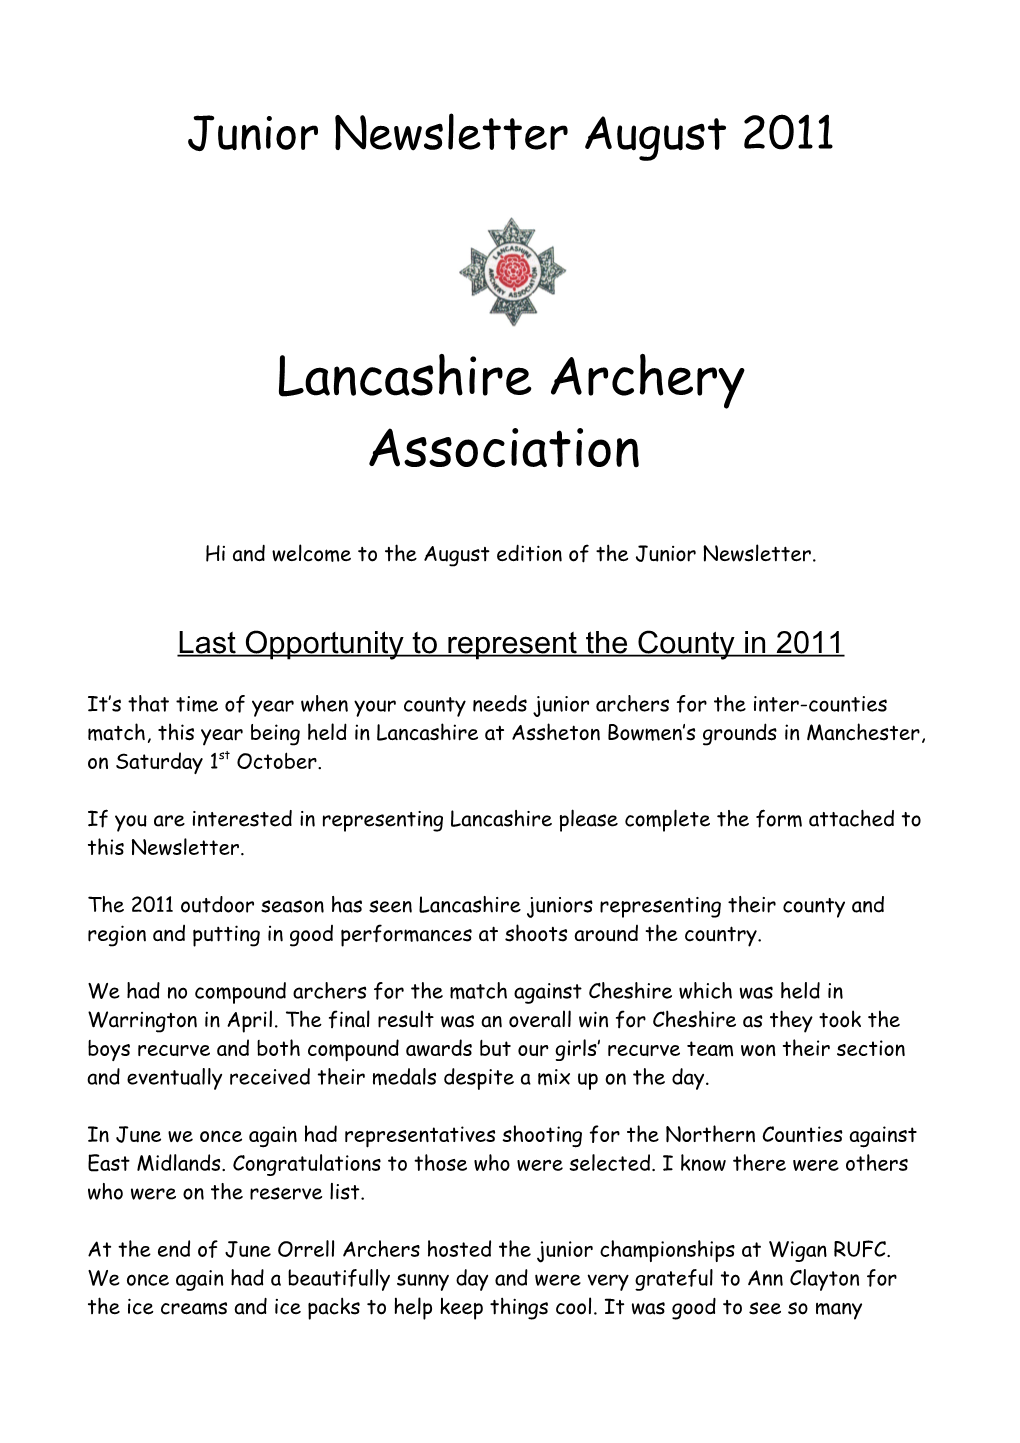 Lancashire Archery Association Junior Newsletter